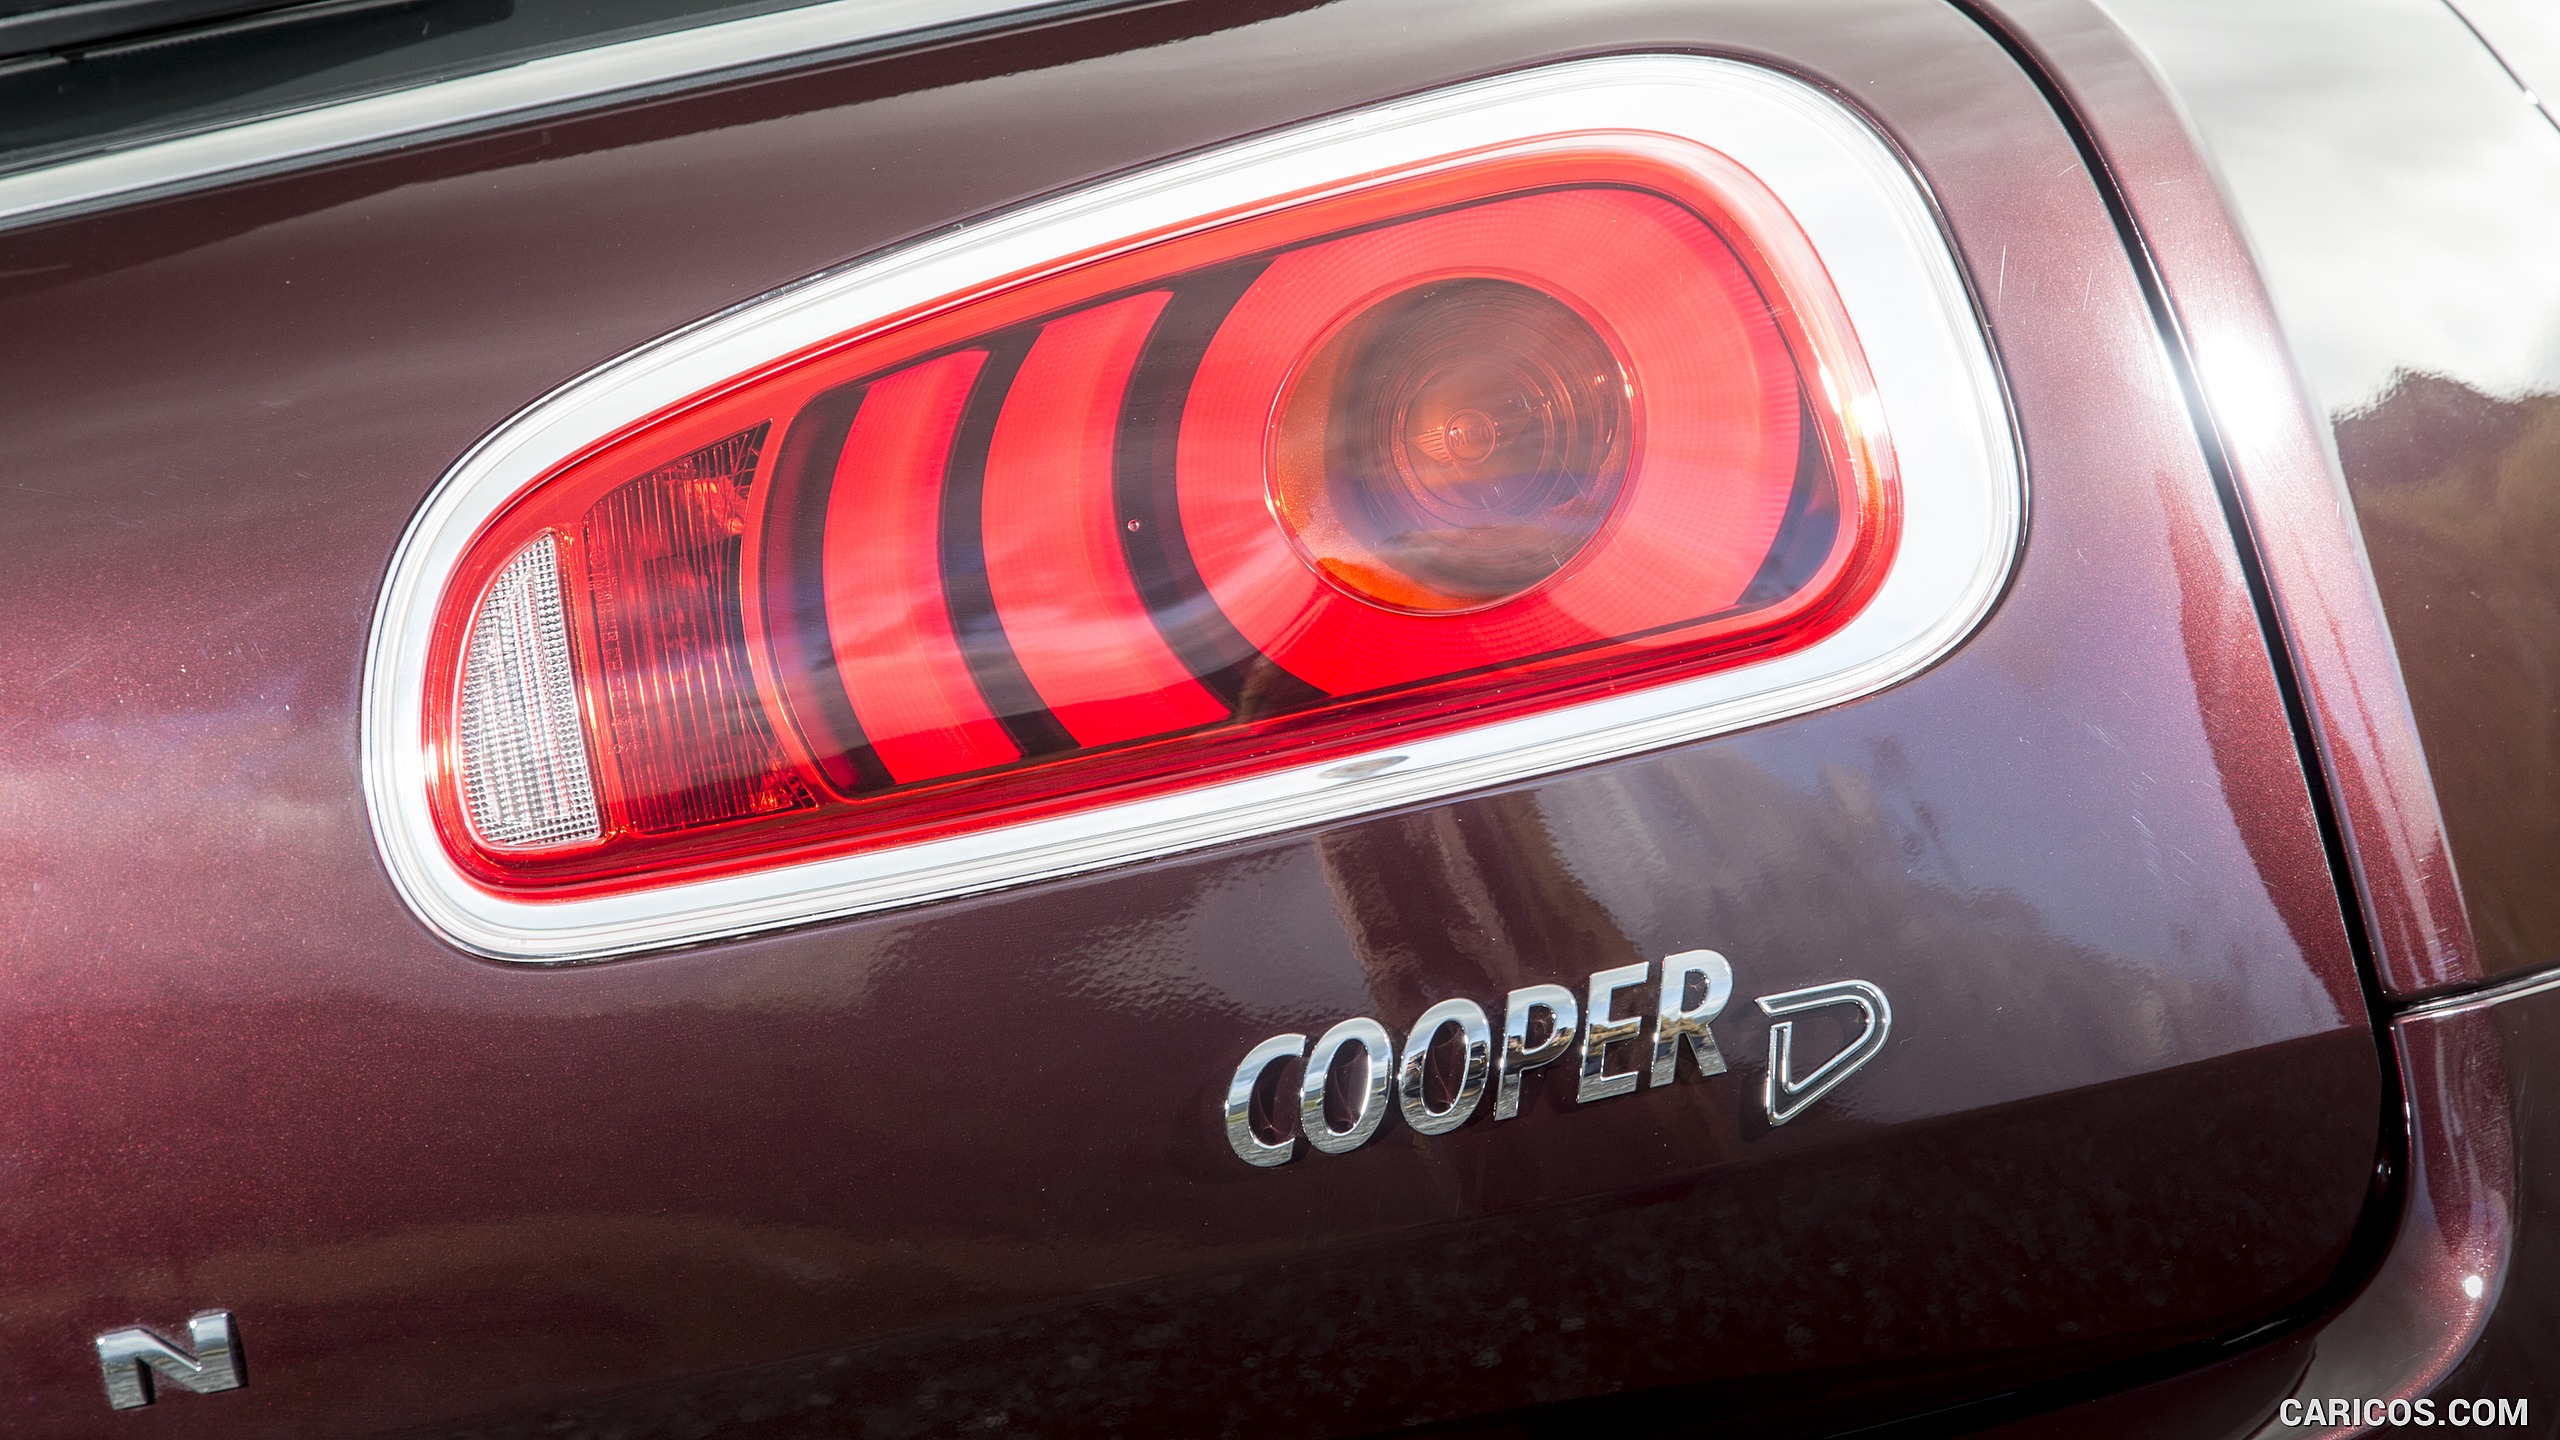 2016 MINI Cooper Clubman D (UK-Spec) - Tail Light, #125 of 275